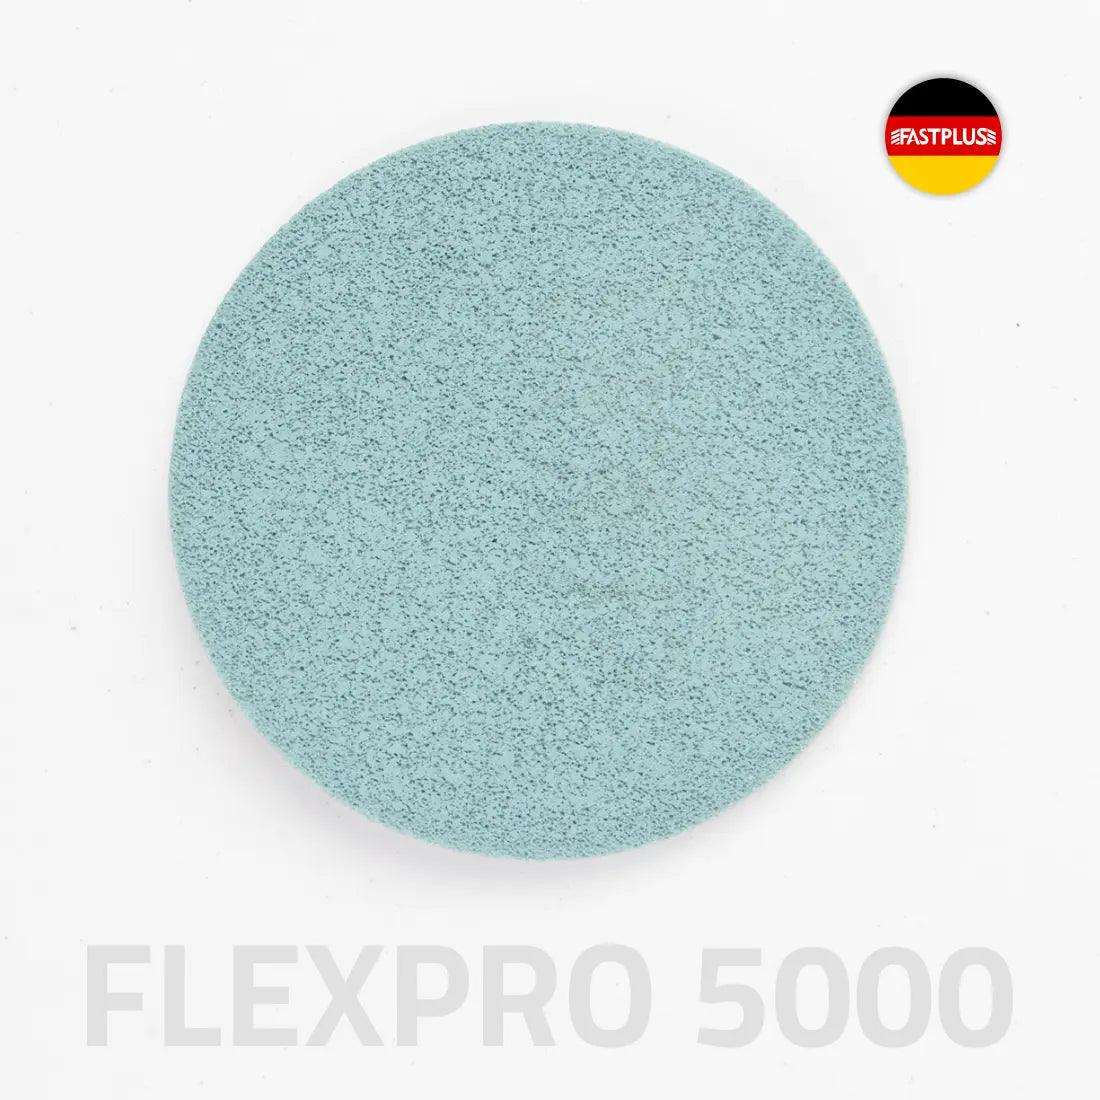 75mm FLEXPRO fine finishing foam discs trizact P5000 Schaumstoff feinschleifscheiben K5000 Disques de finition fine